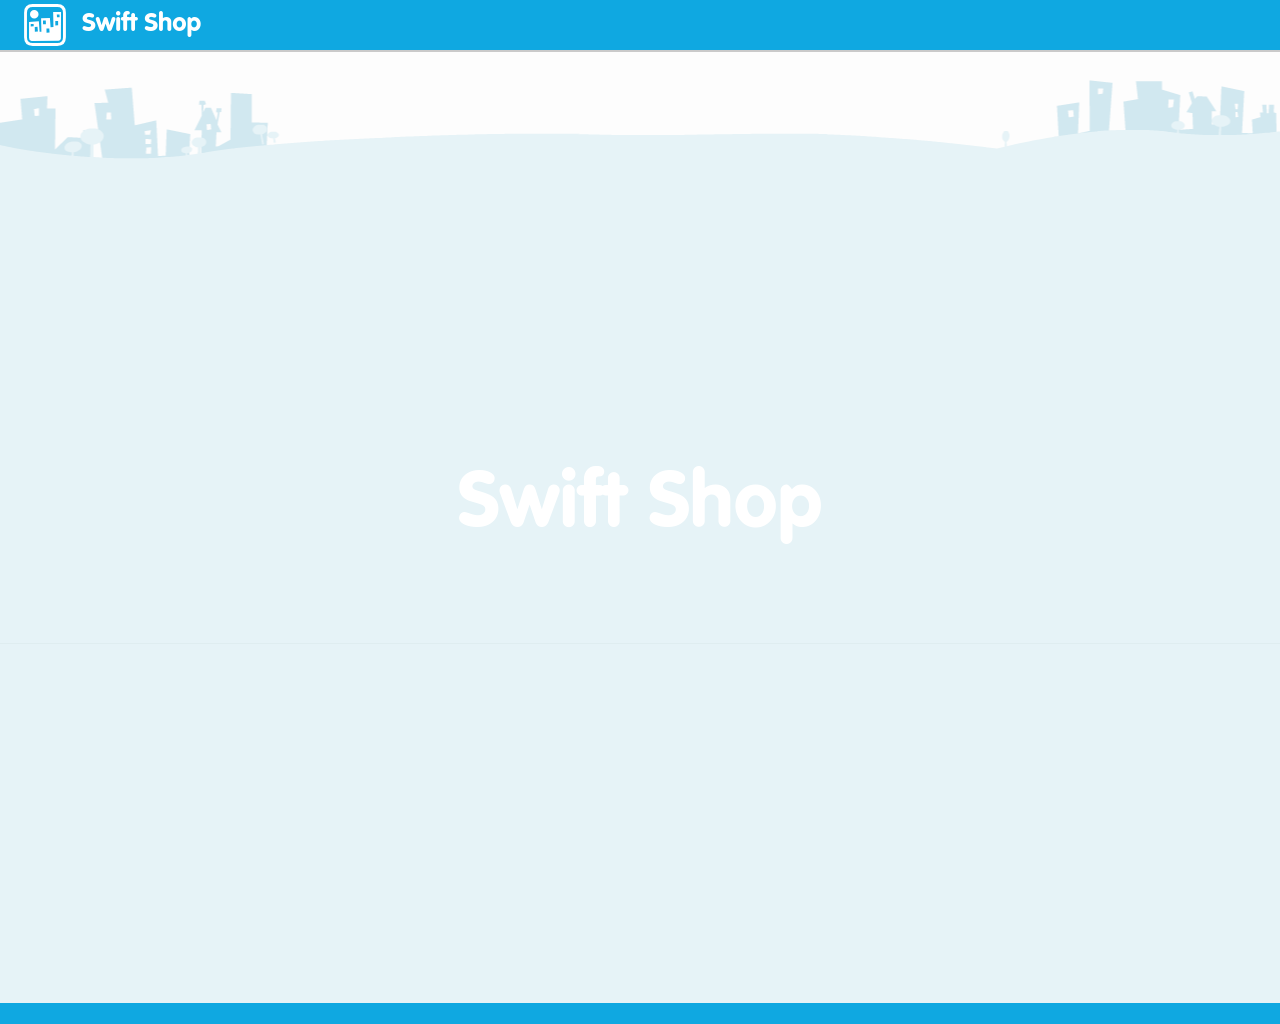 Swift Shop